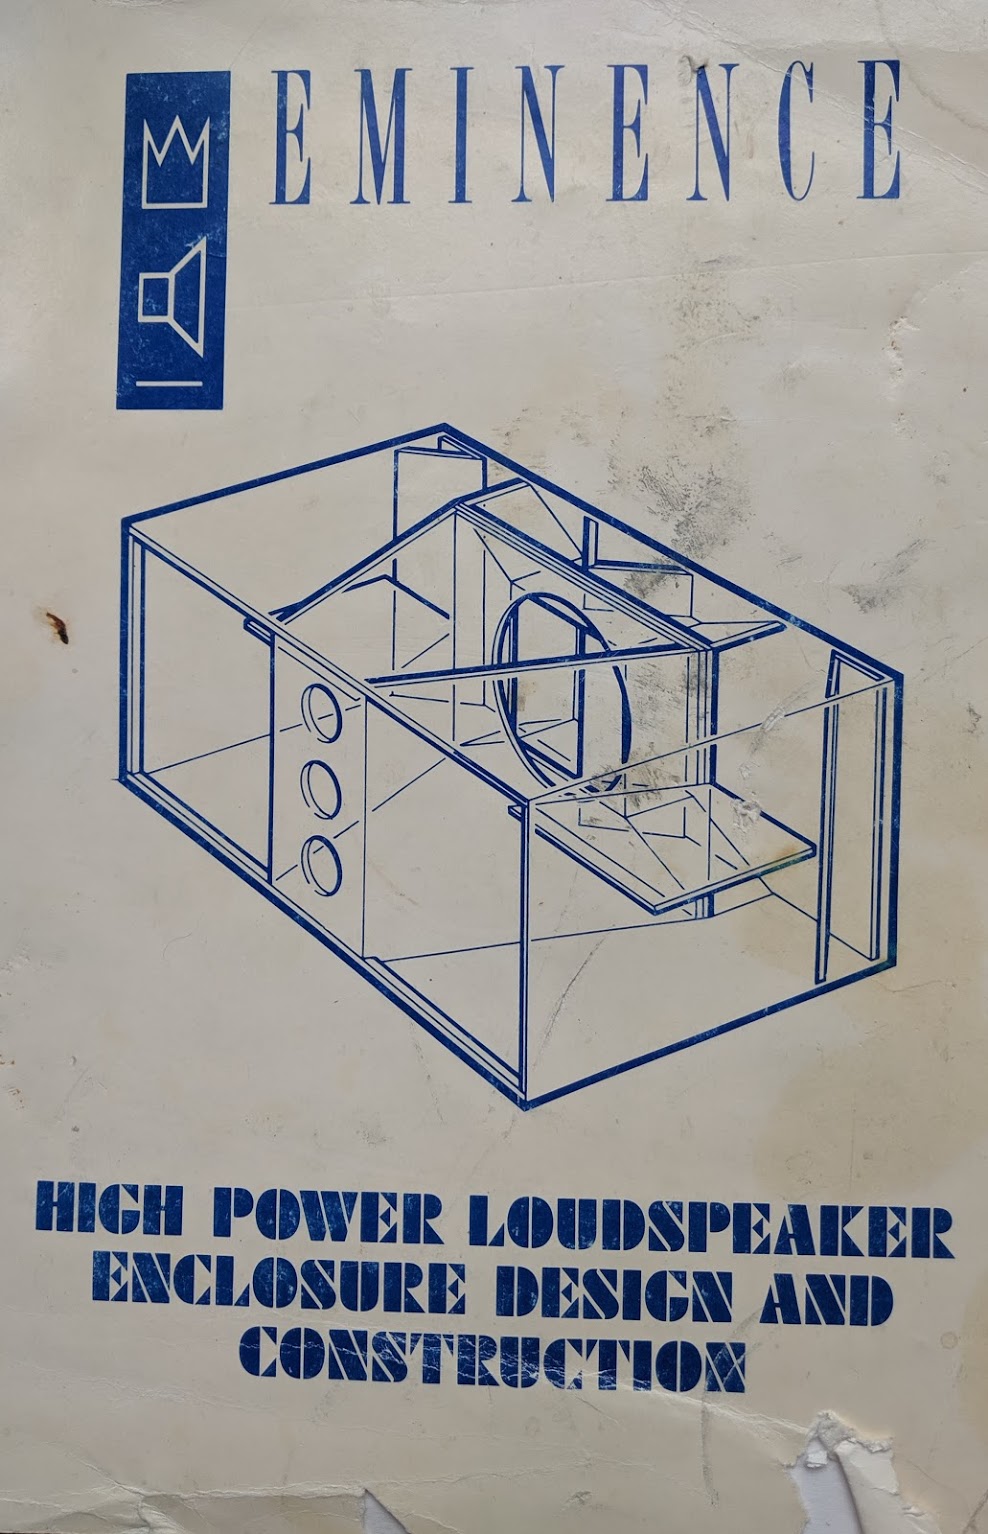 Speaker design